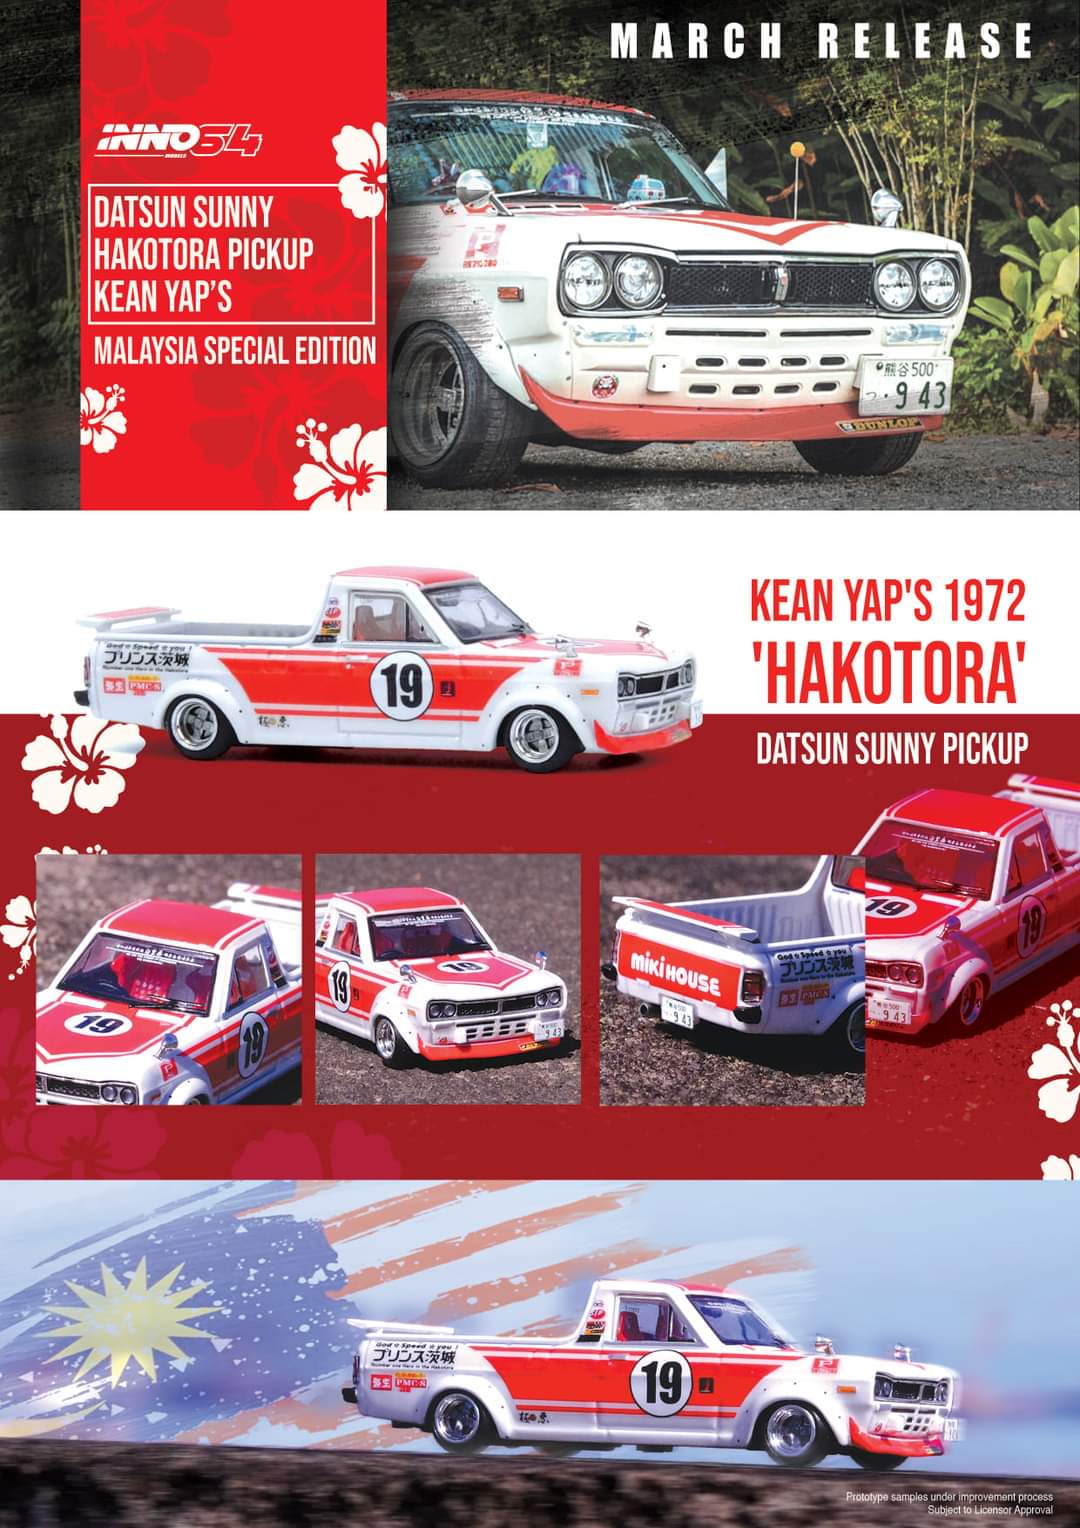 Inno64 Malaysia Exclusive
DATSUN SUNNY HAKOTORA Kean Yip's 1972 Inno64